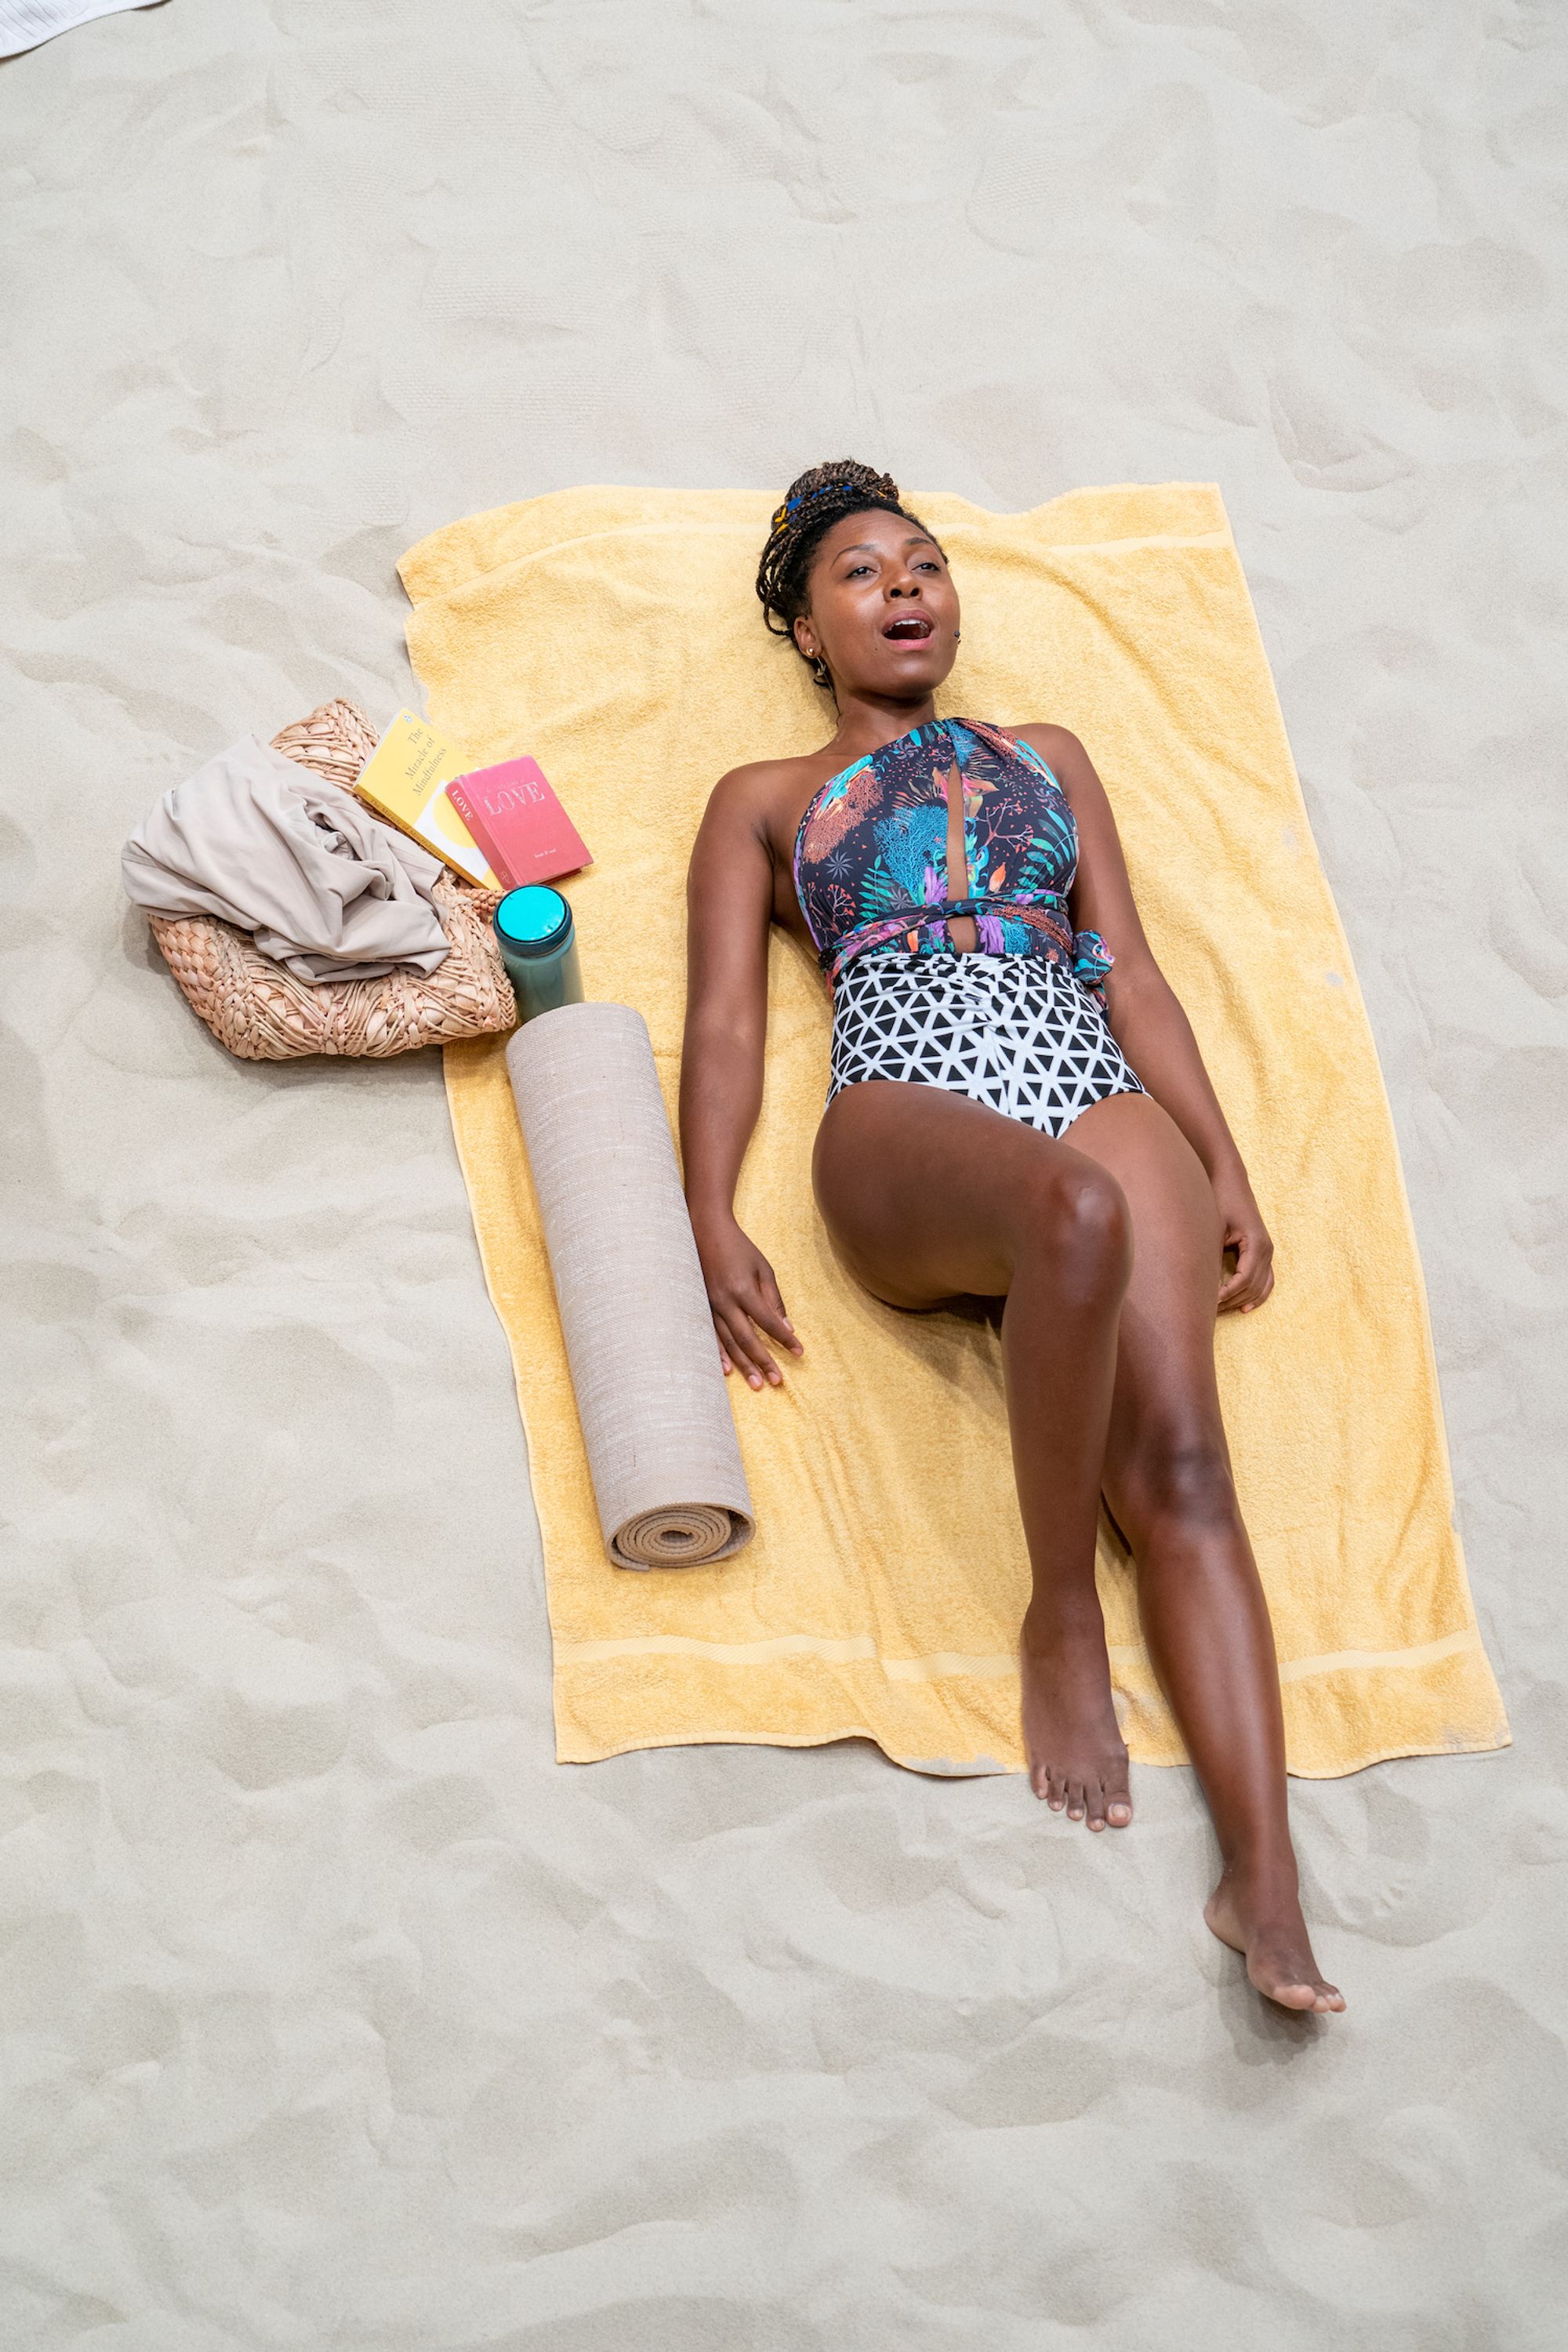 A woman reclining on a beach towel